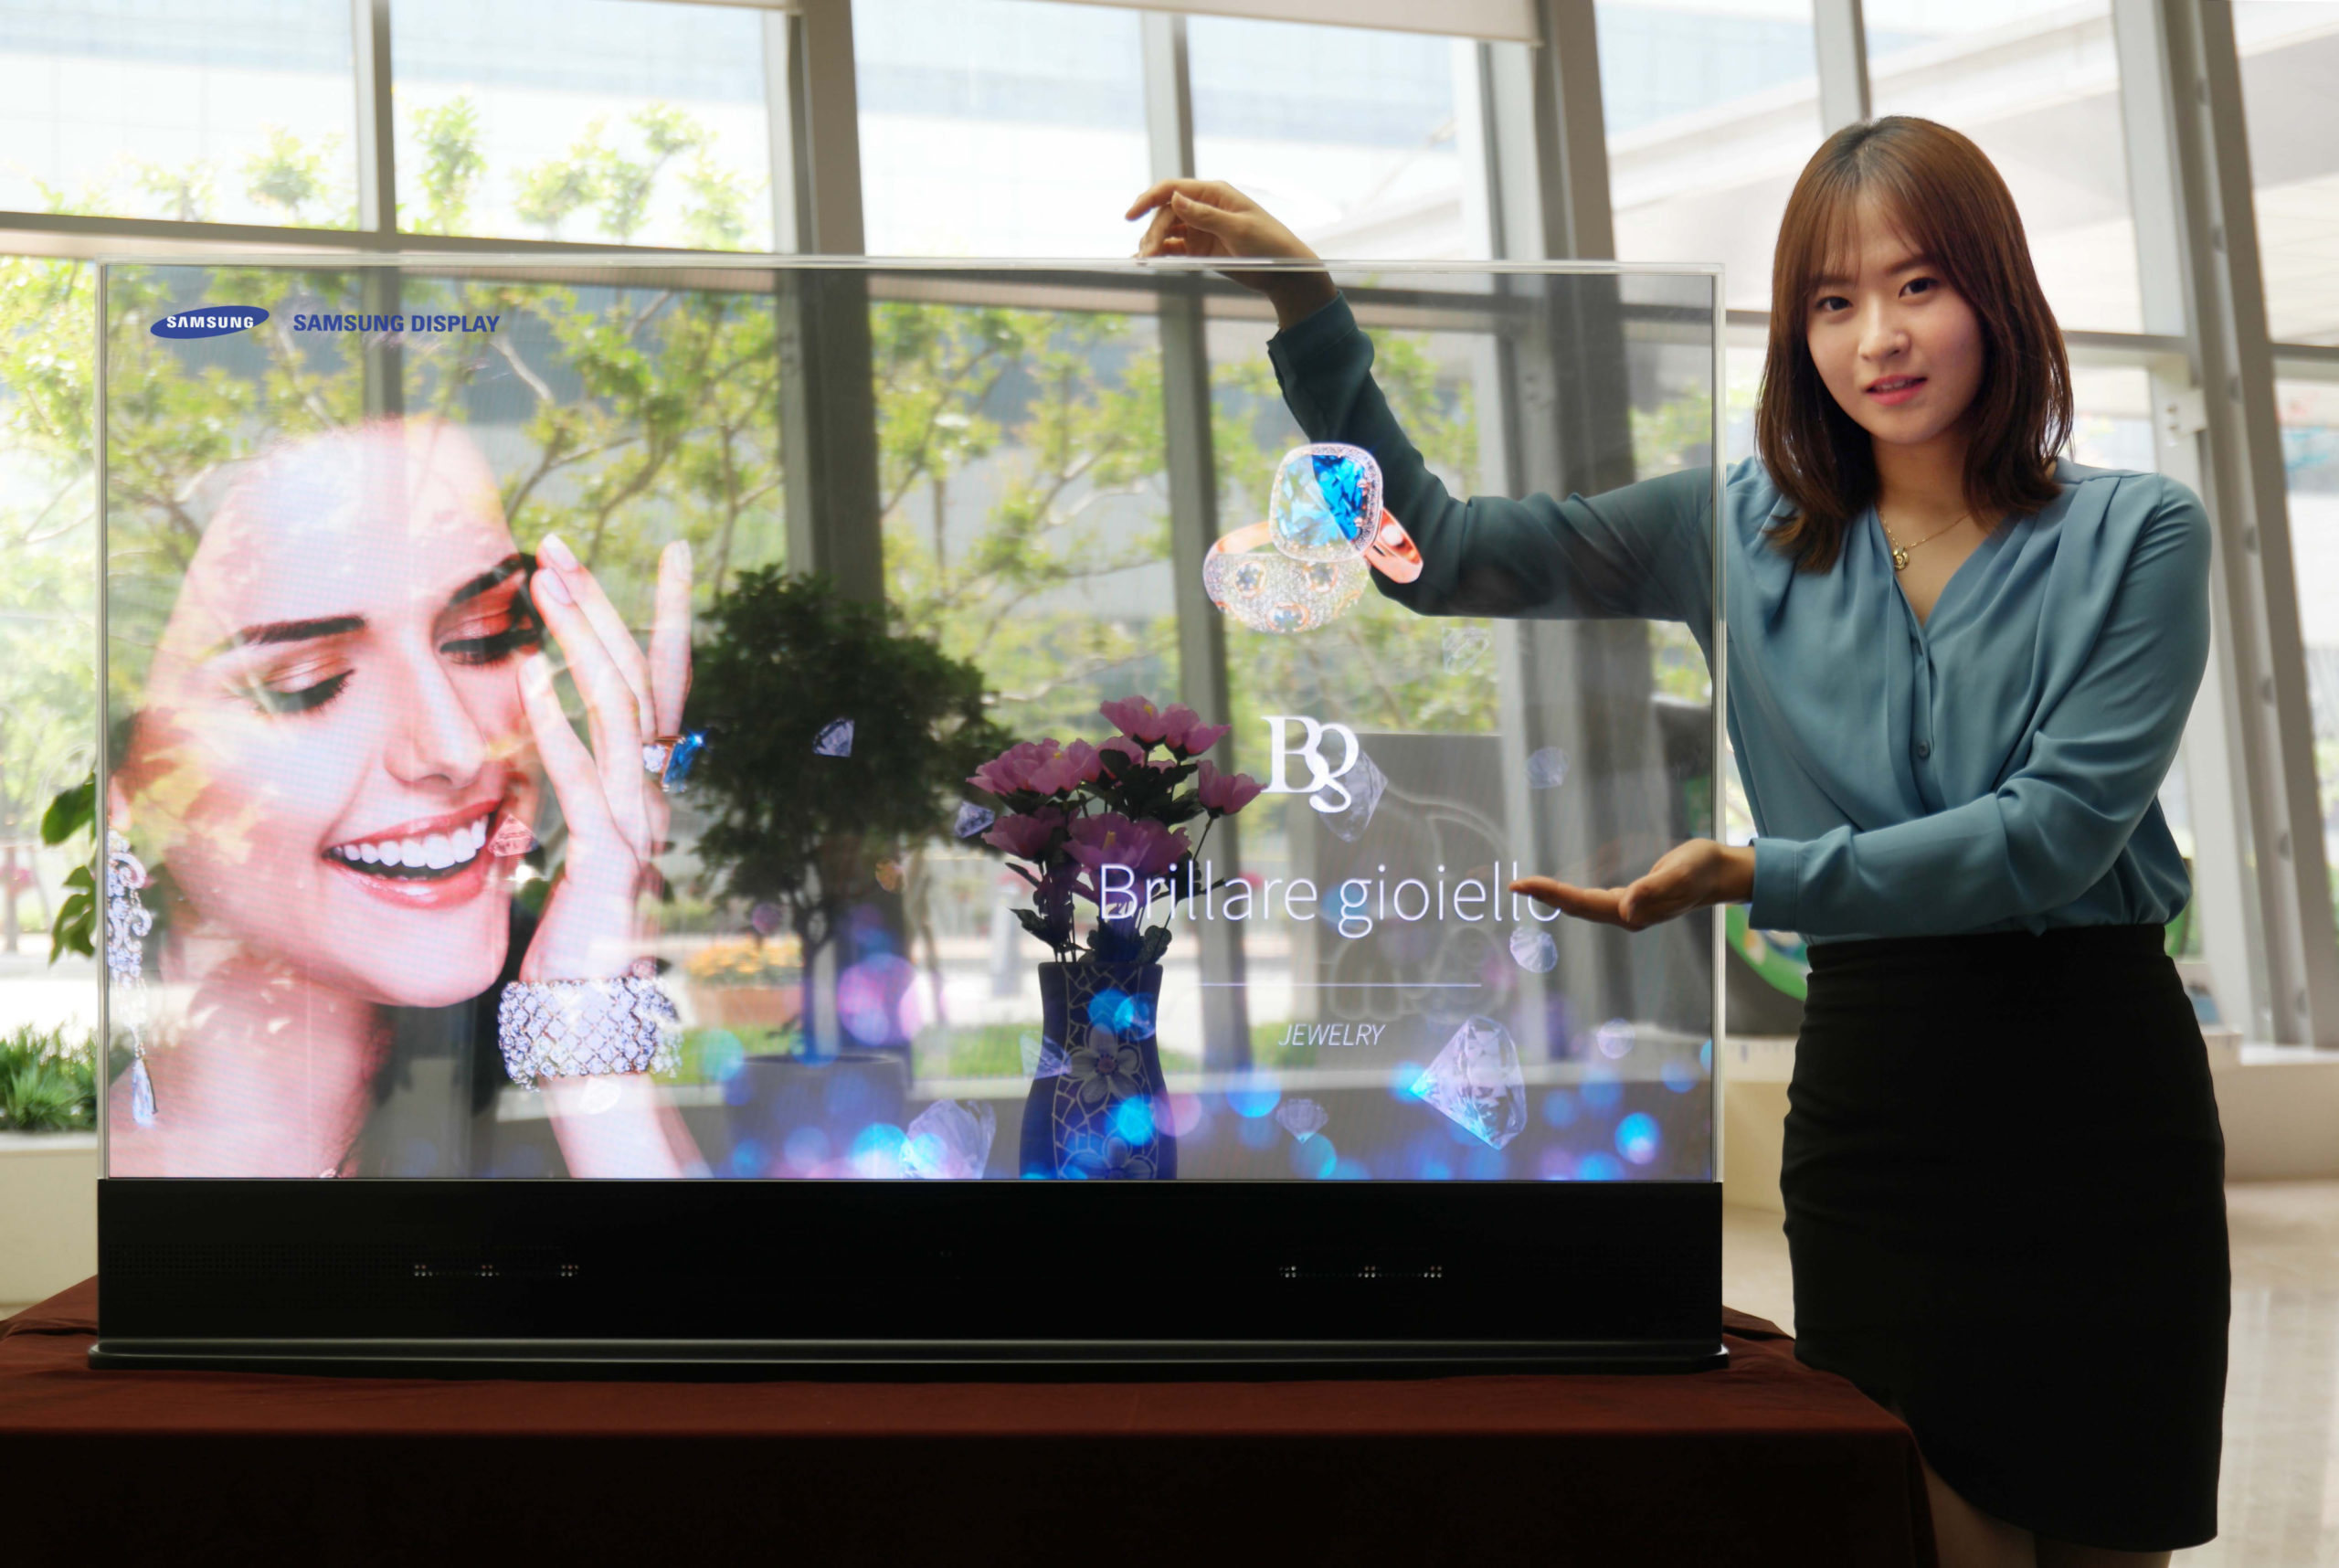 Samsung Displayek LCD pantaila fabrikak ixten ditu!
